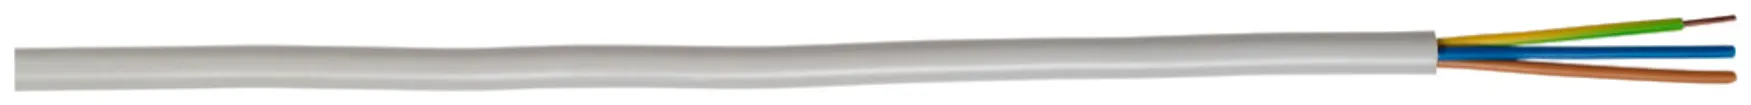 Kabel TT 3×1.5mm² LNPE braun Eca 